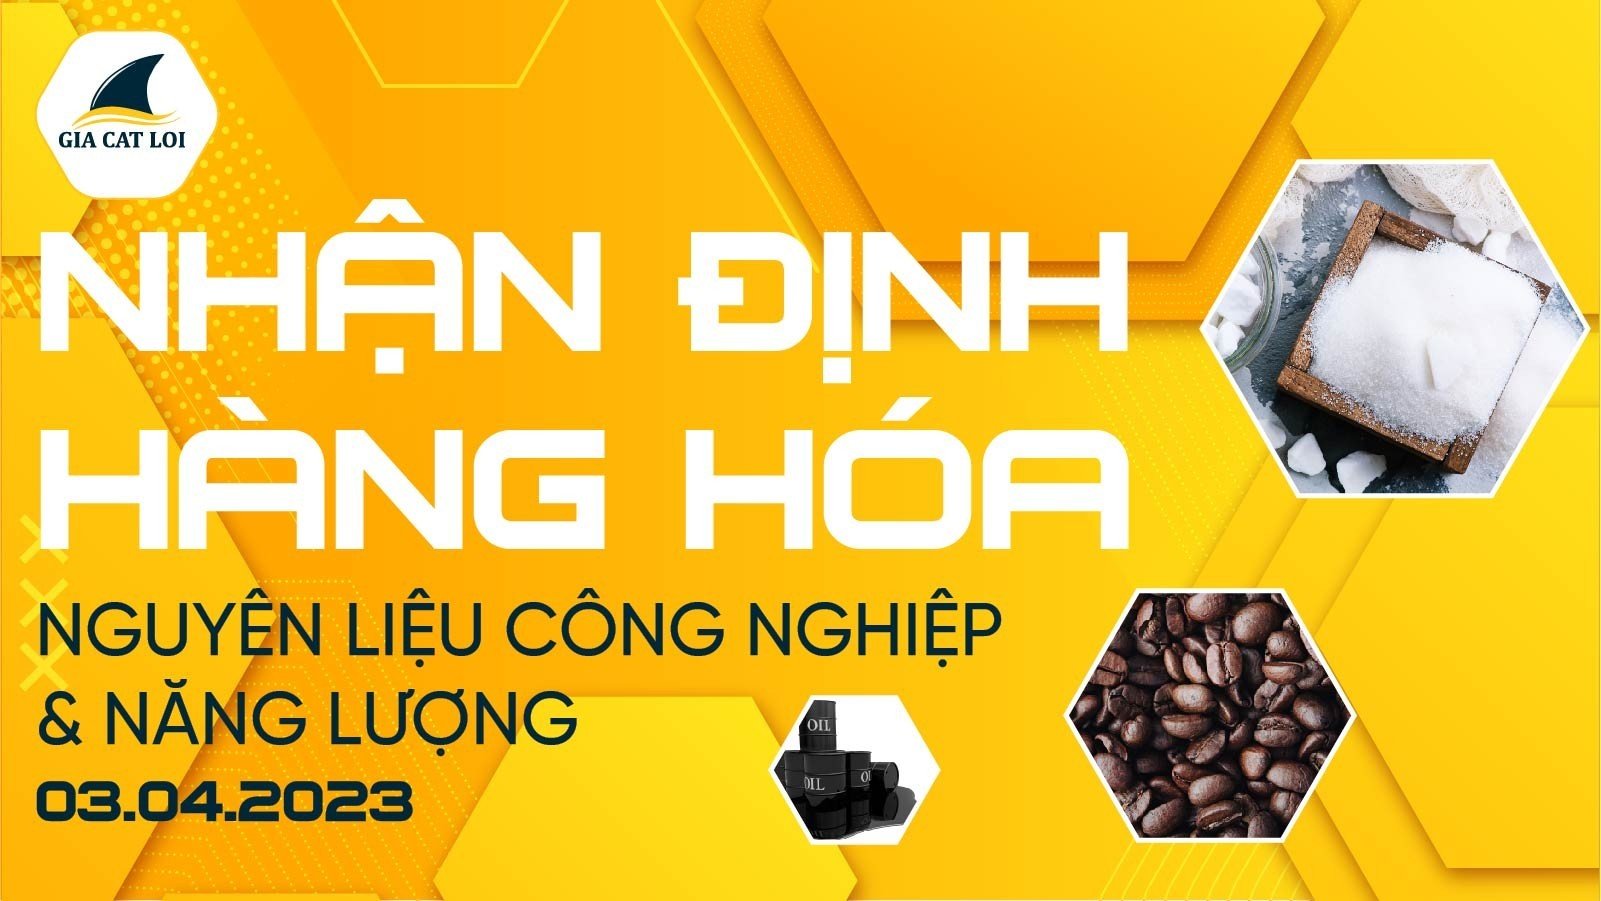 nhan-dinh-nguyen-lieu-cong-nghiep-nang-luong-03-04-2023